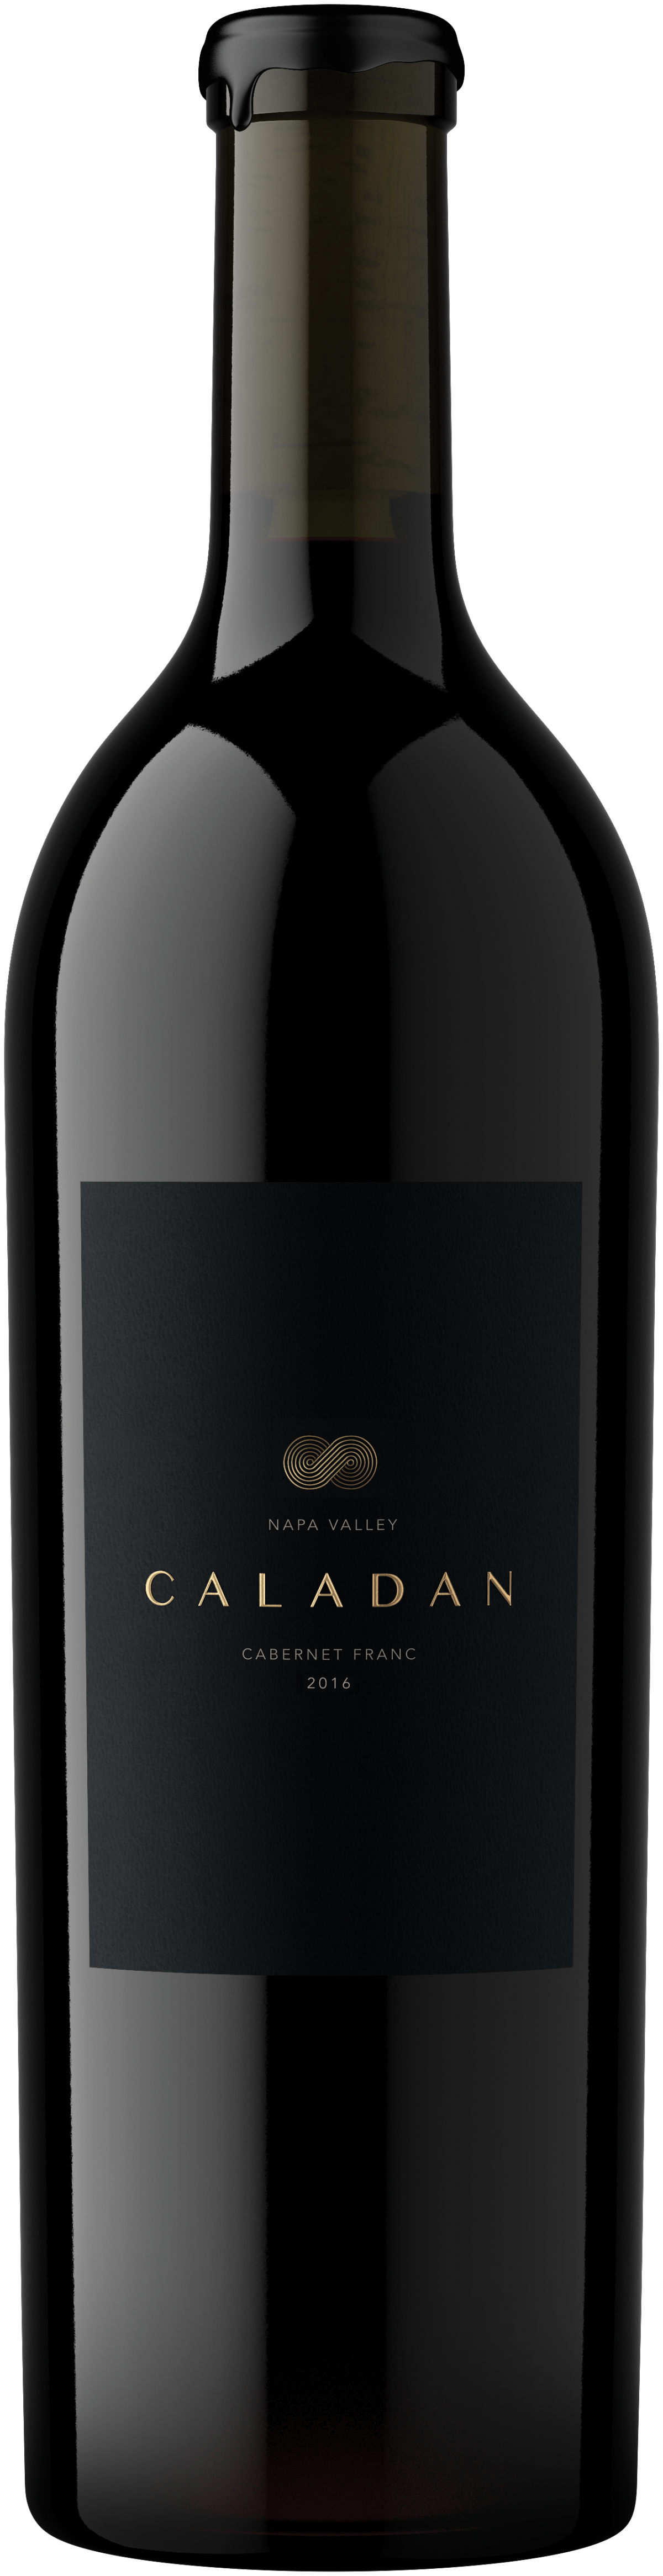 Caladan 2016 Cabernet Franc wine bottle